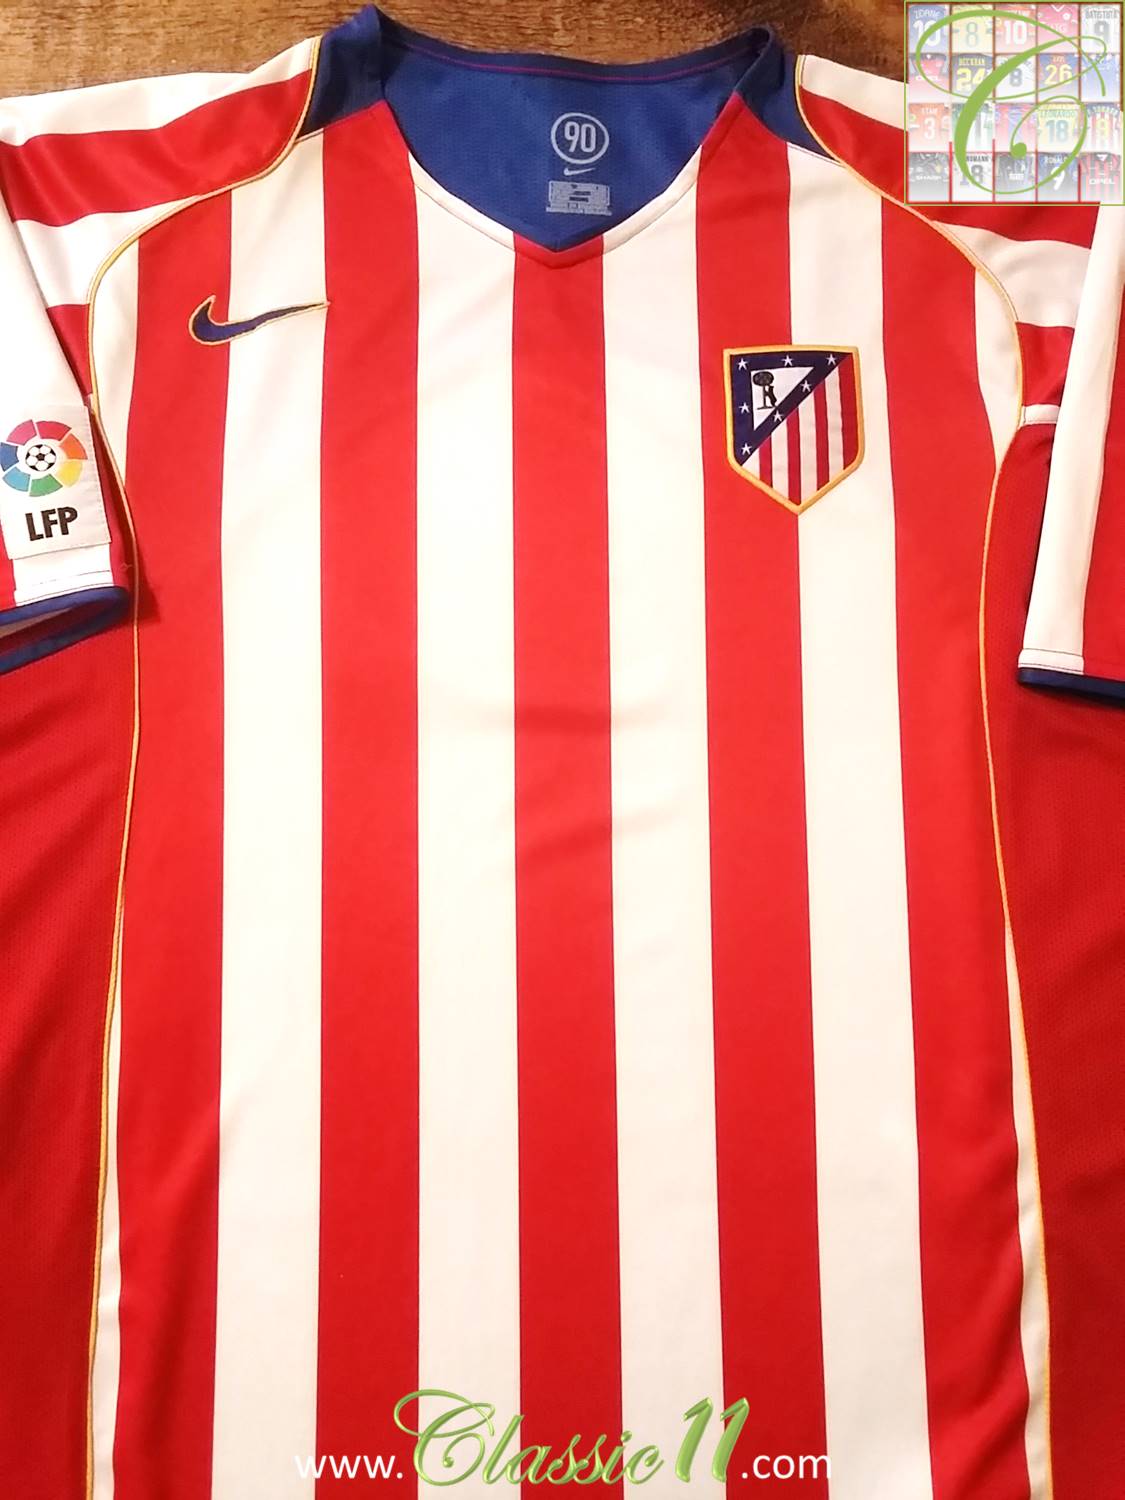 Atletico Madrid Home football shirt 2004 - 2005.